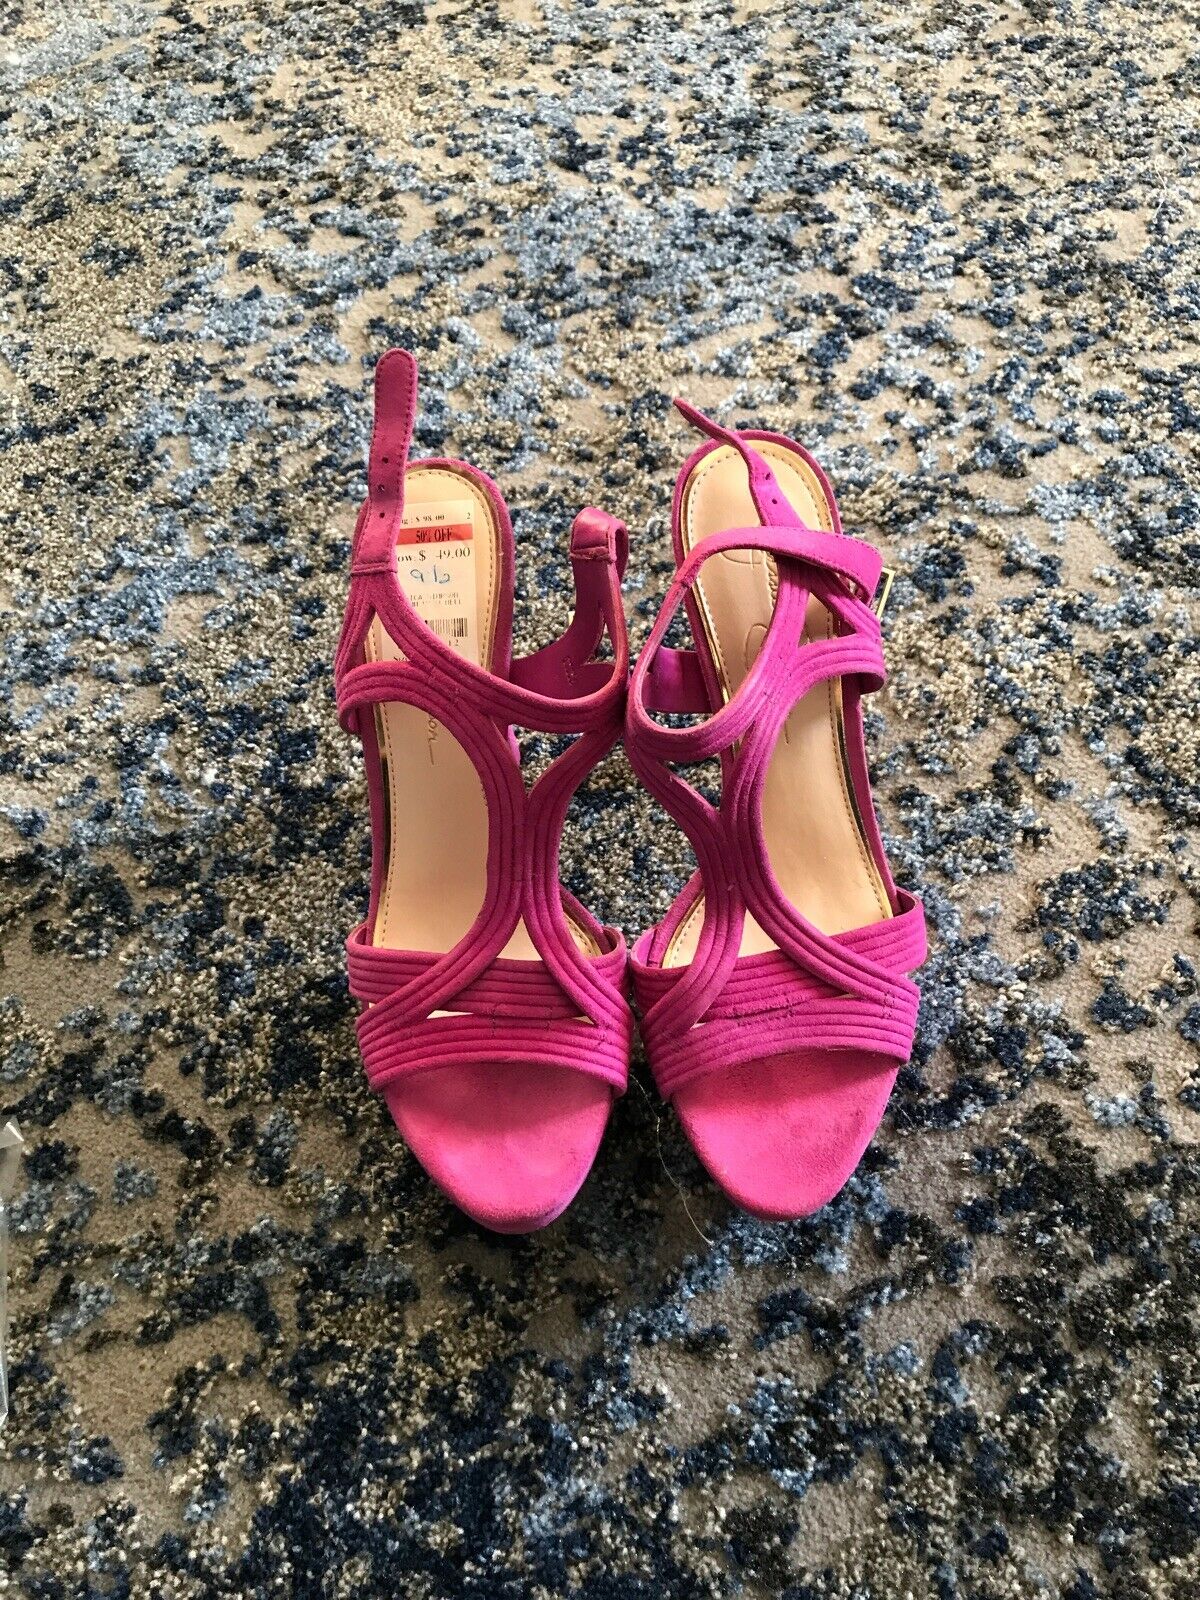 Women’s jessica simpson shoes 9.5 Sexy Fuchsia Pink Platform Sandals